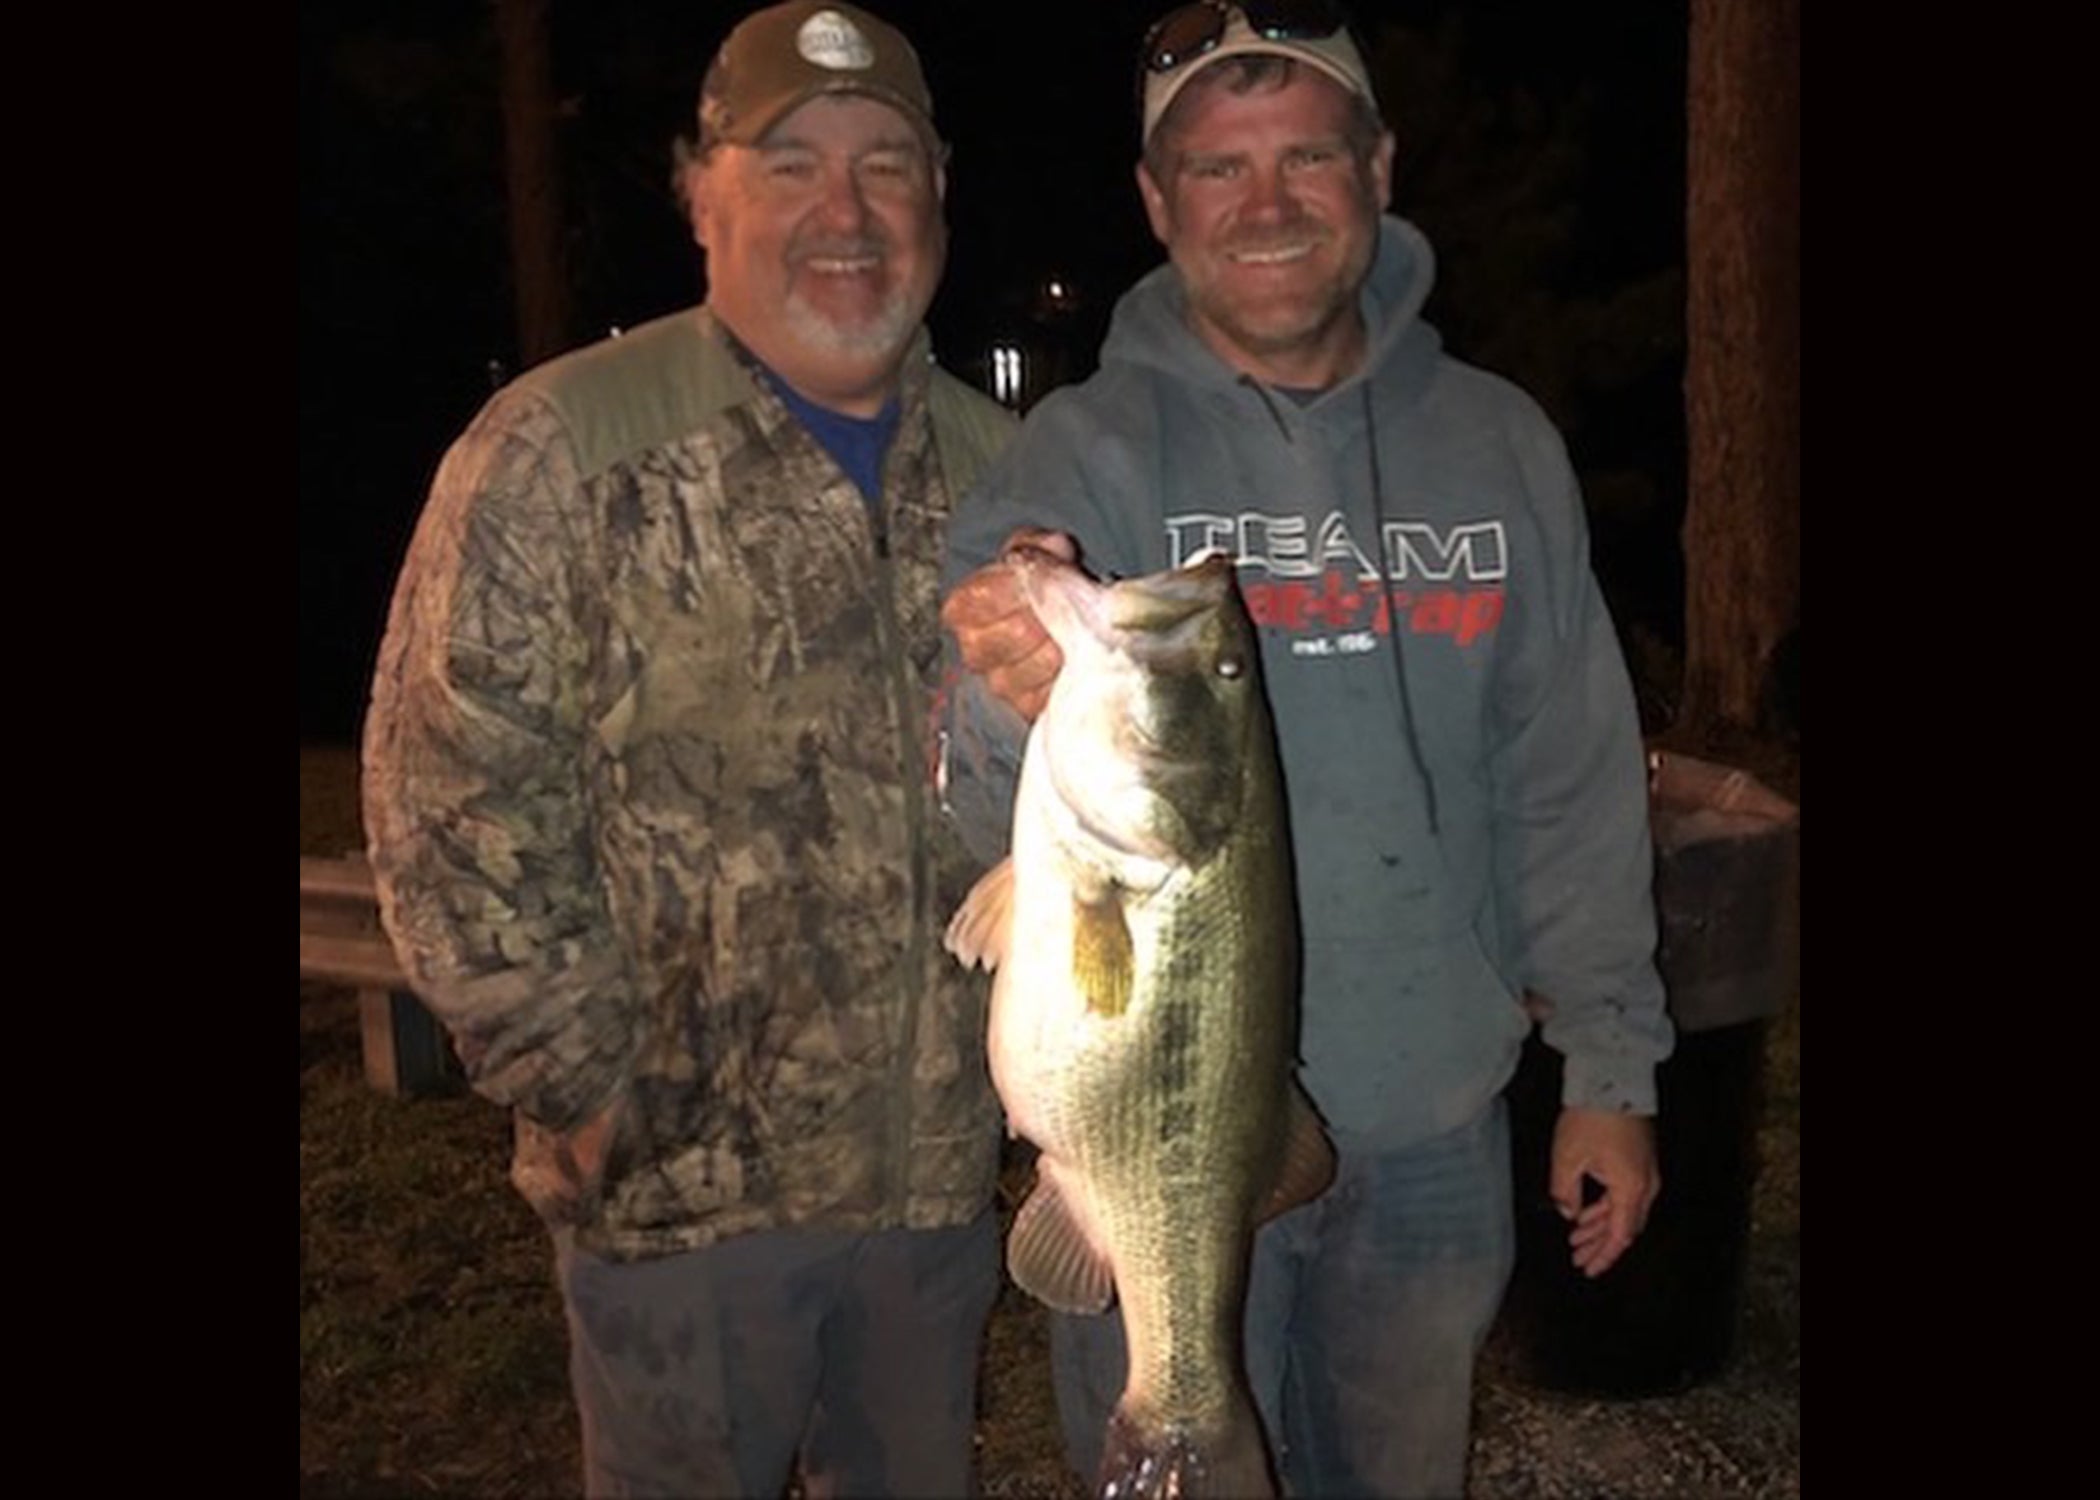 photo of big bass caught at night